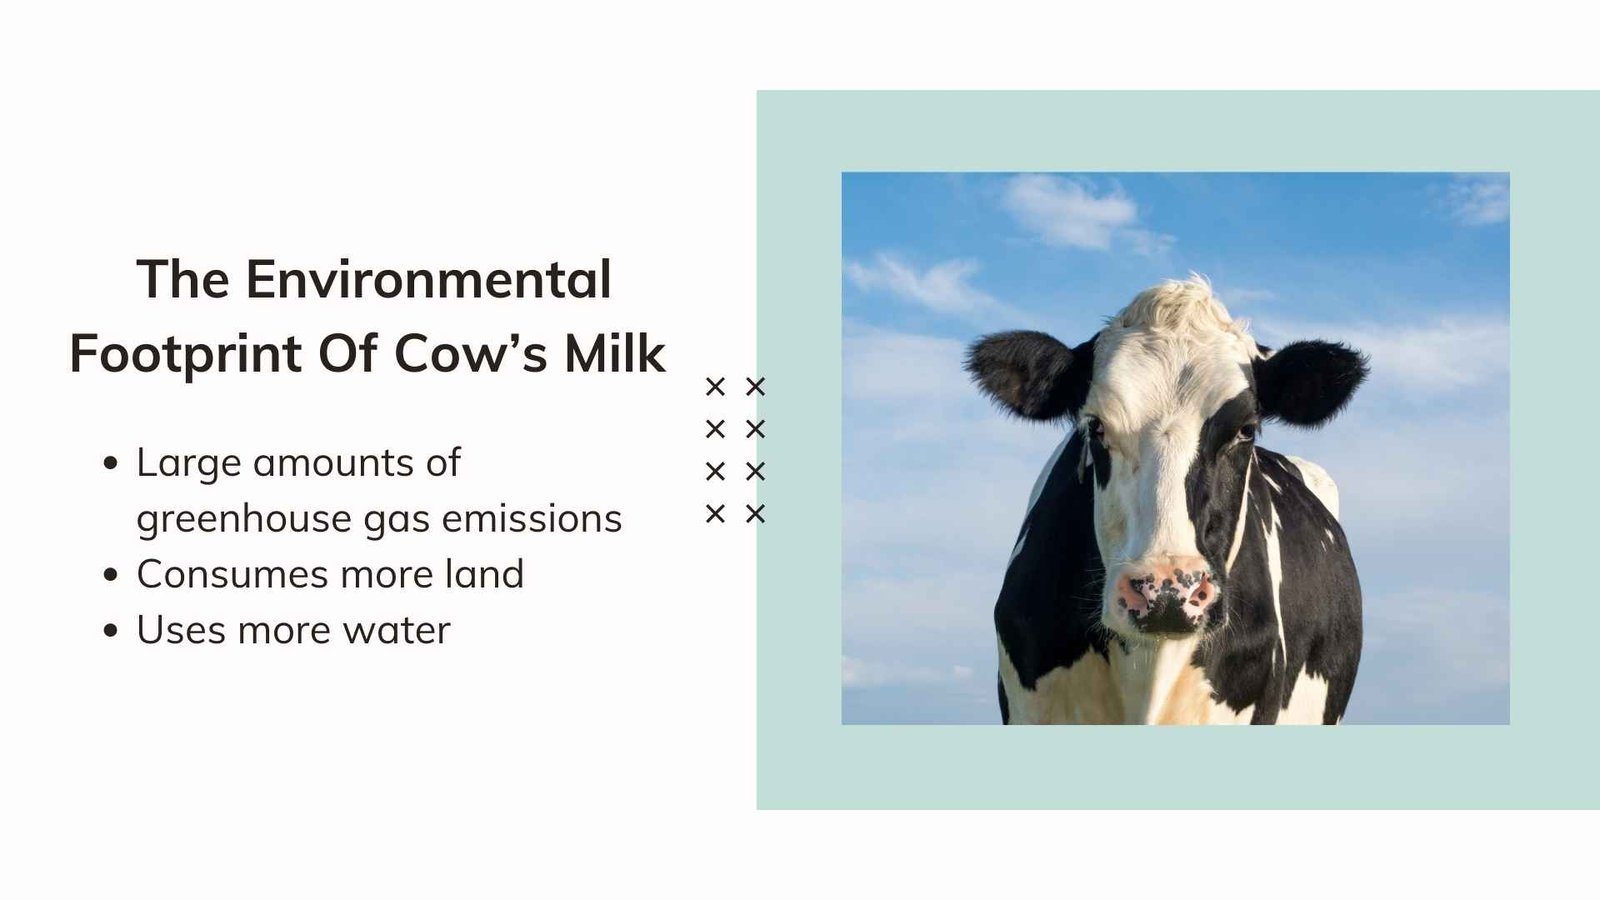 The Environmental Footprint Of Cow’s Milk 